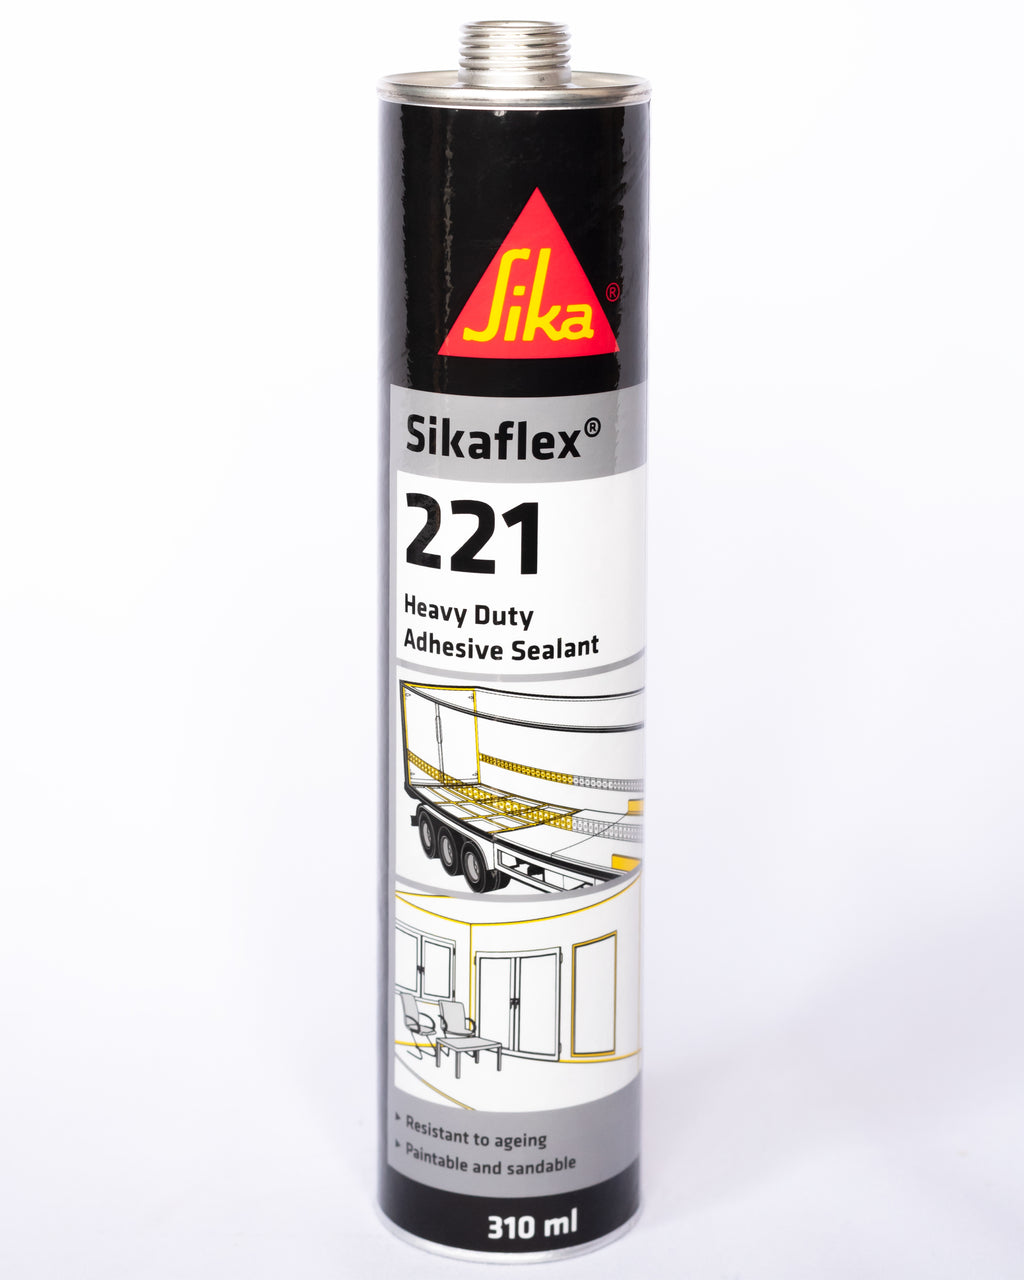 SIKA Sikaflex 221 Heavy Duty Adhesive Sealant (310ml)